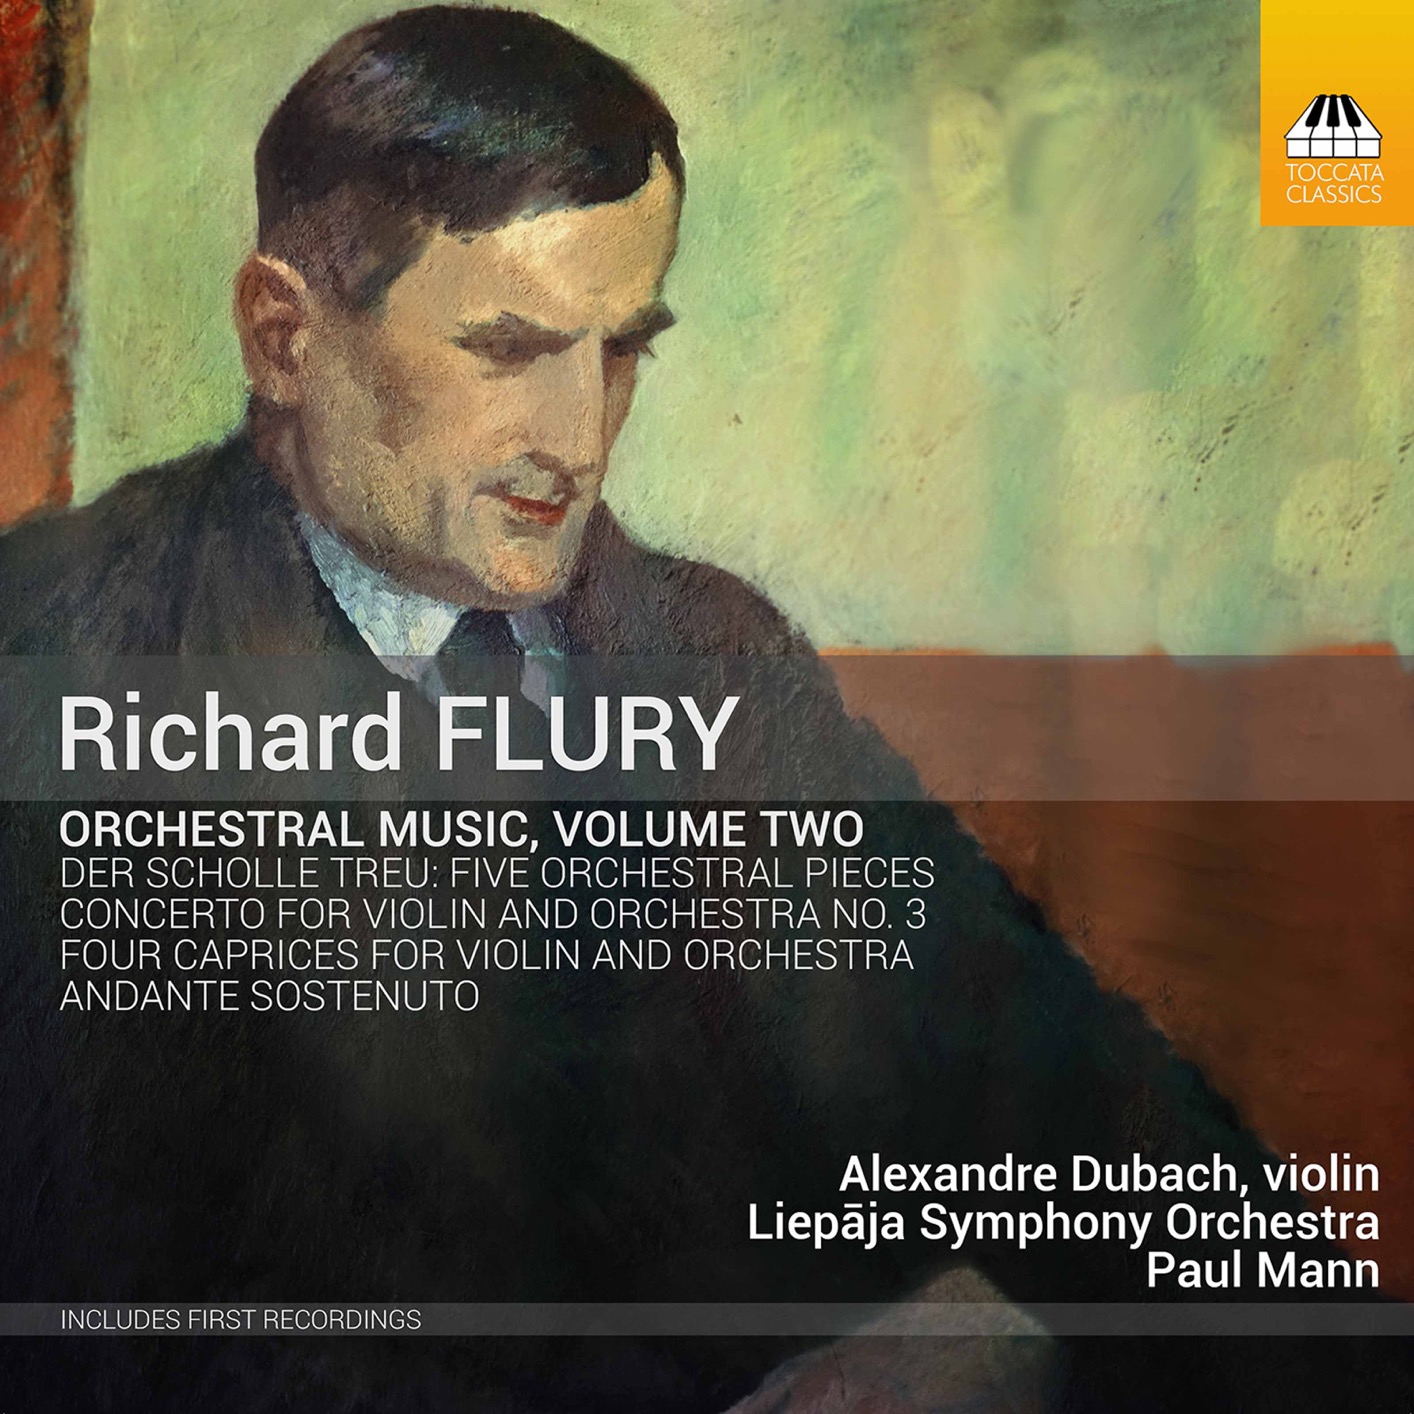 Alexandre Dubach, Liepāja Symphony Orchestra & Paul Mann - Richard Flury: Orchestral Music, Vol. 2 (2021) [FLAC 24bit/96kHz]